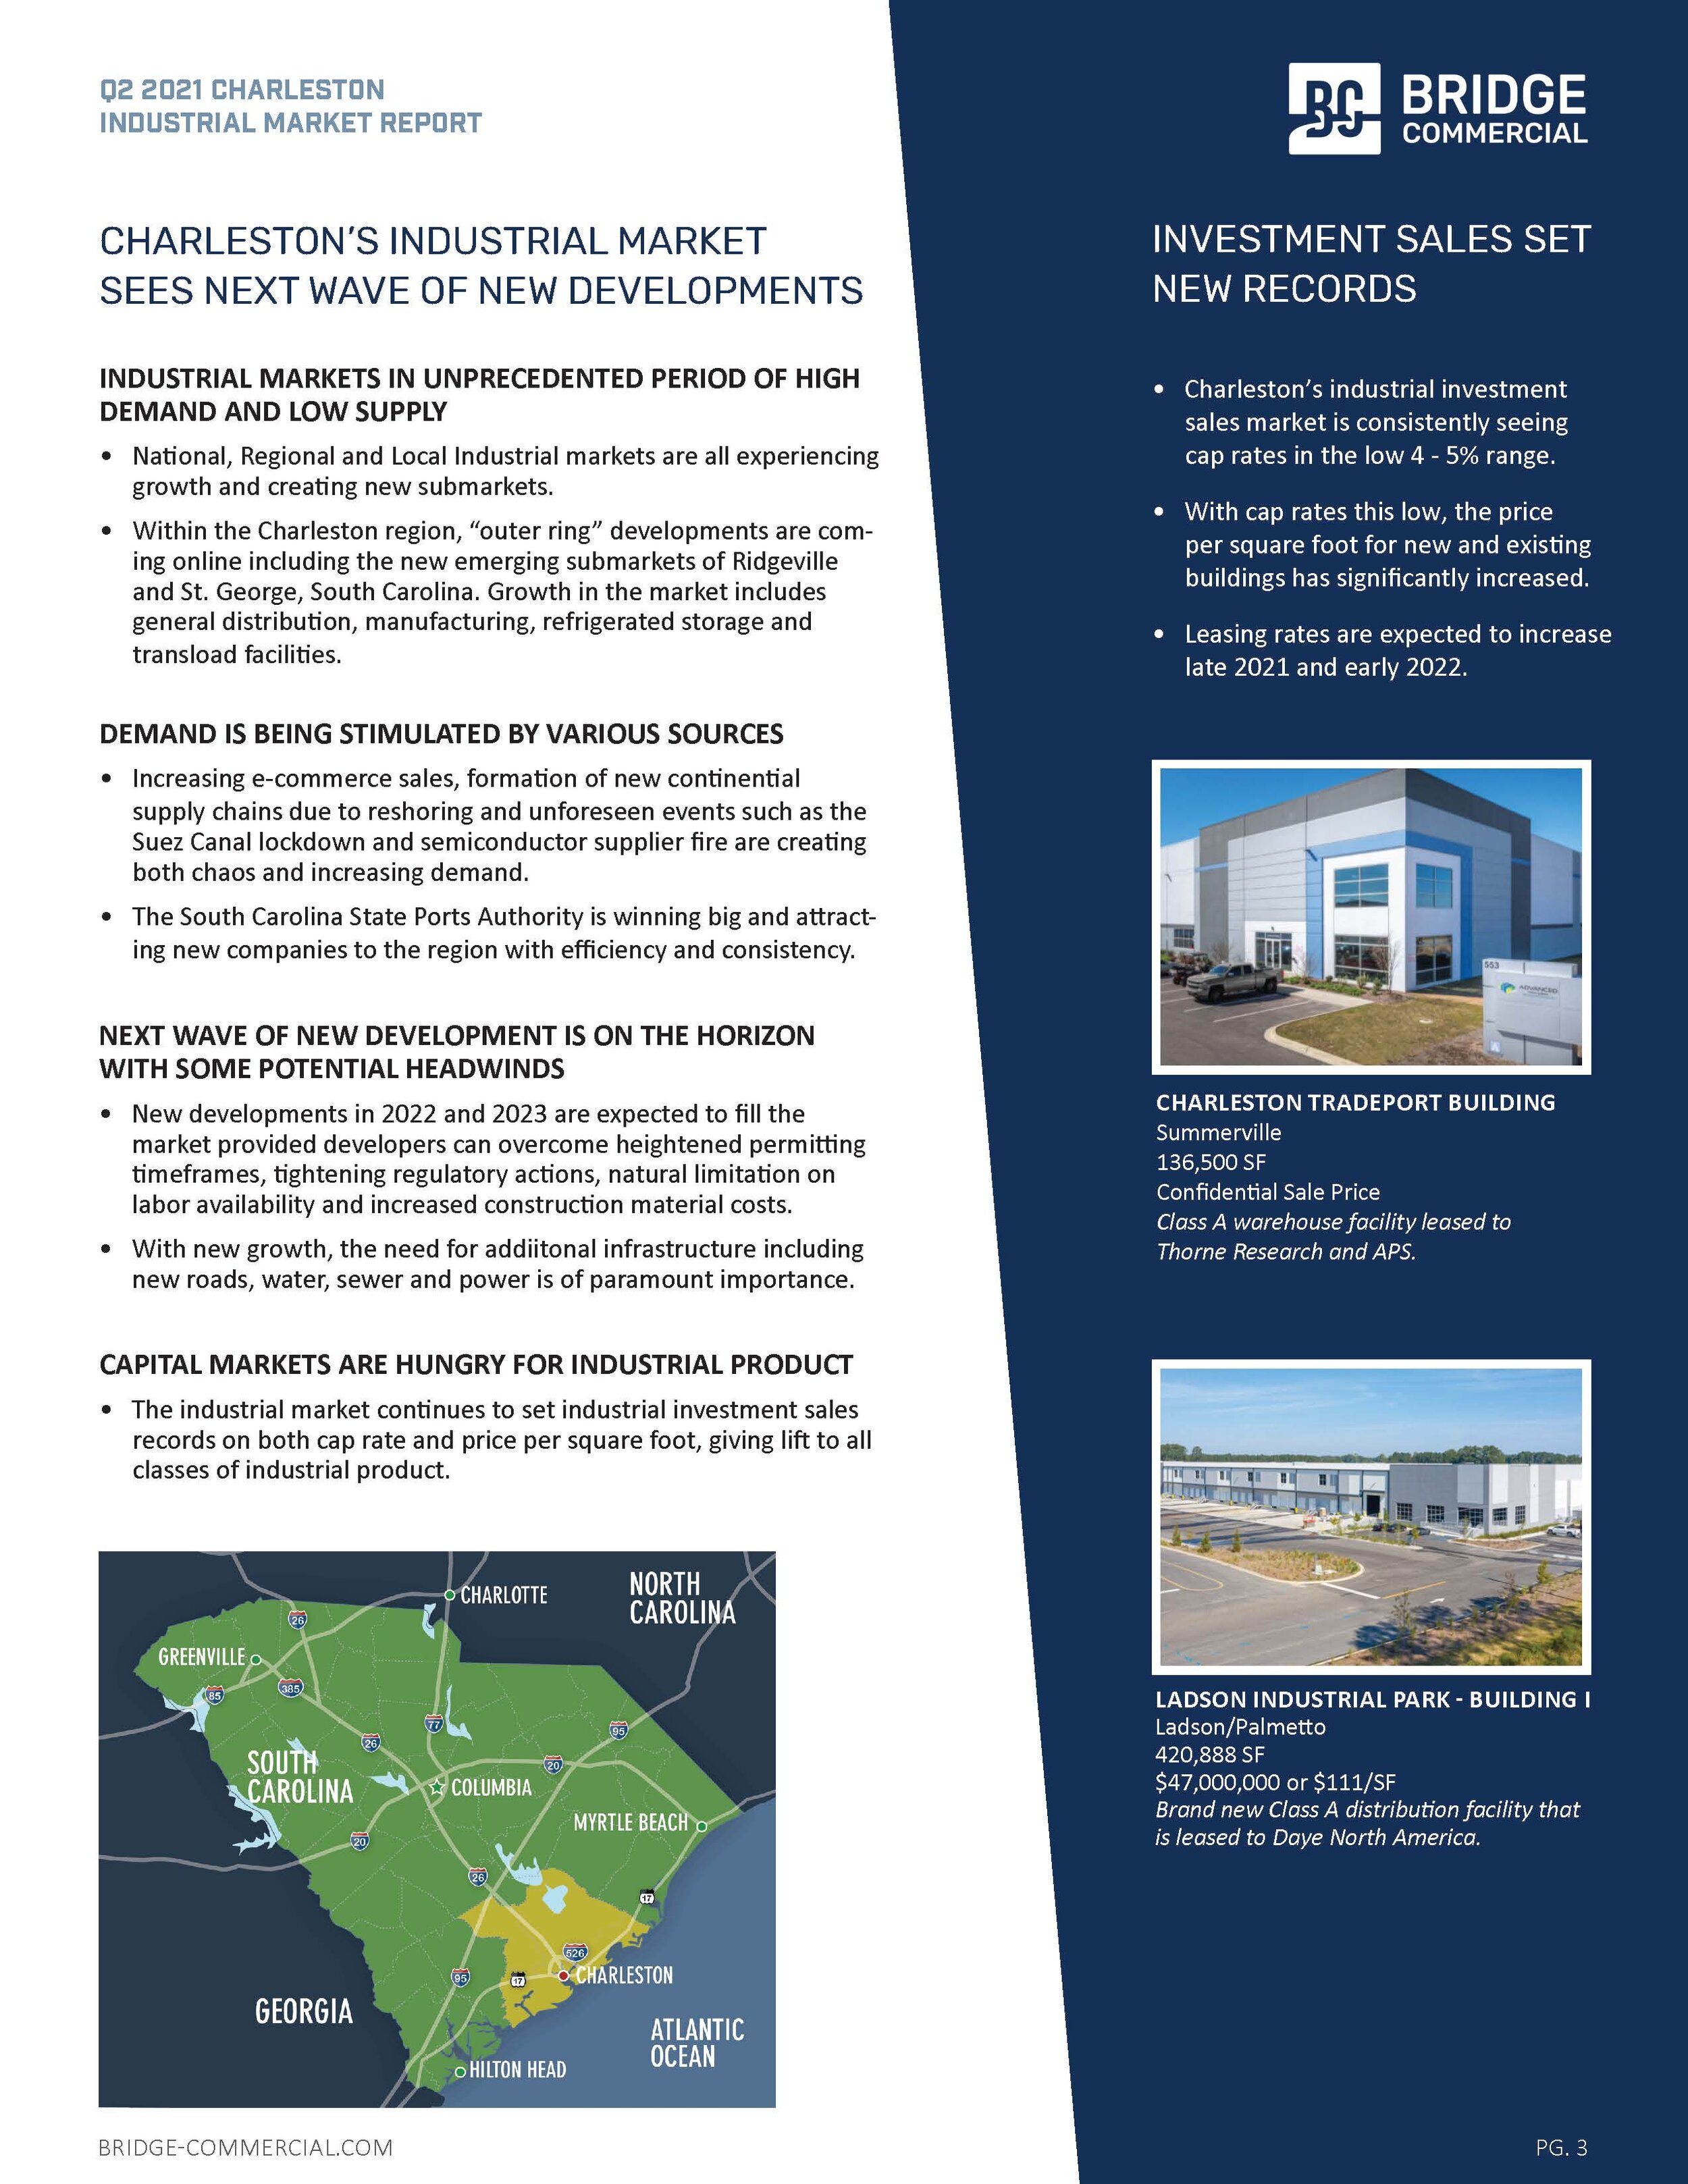 Q2 2021 Charleston Industrial Market Report_Bridge Commercial_Page_3.jpg